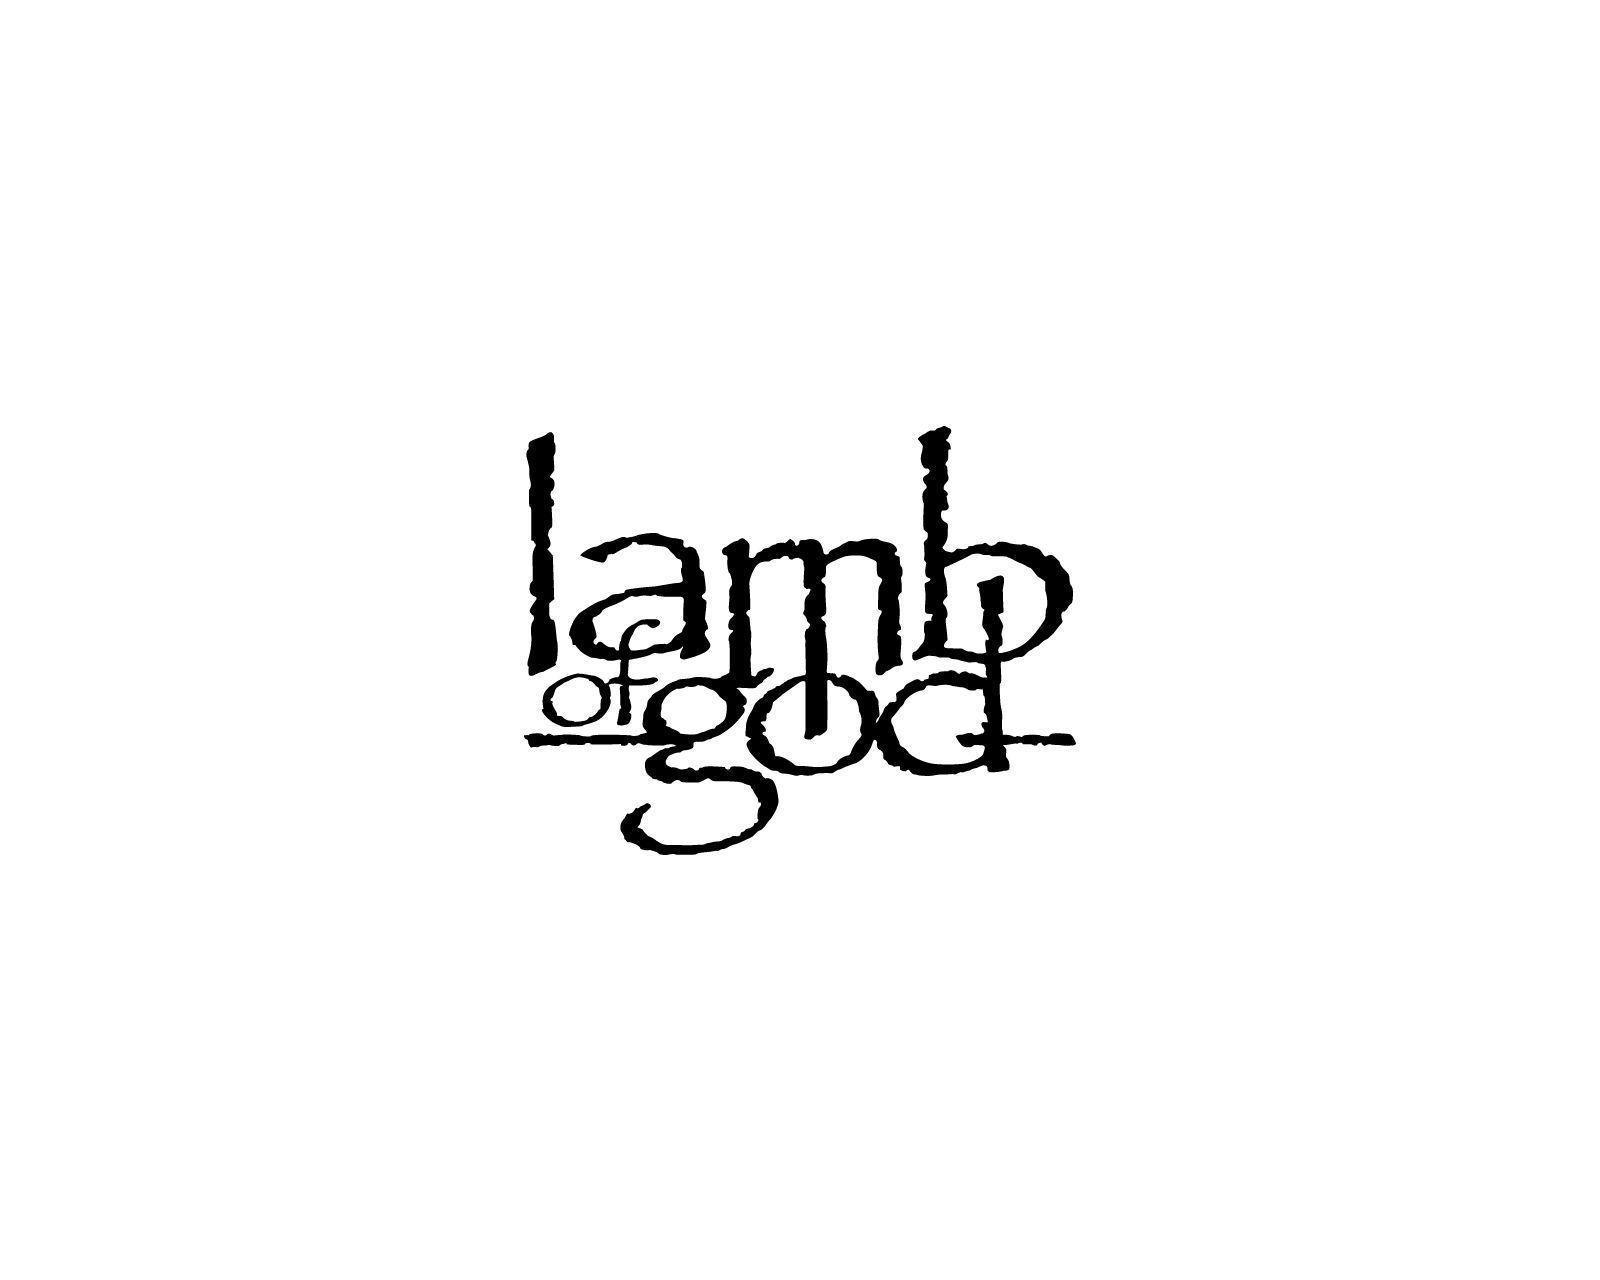 Lamb of god logo. Band logos band logos, metal bands logos